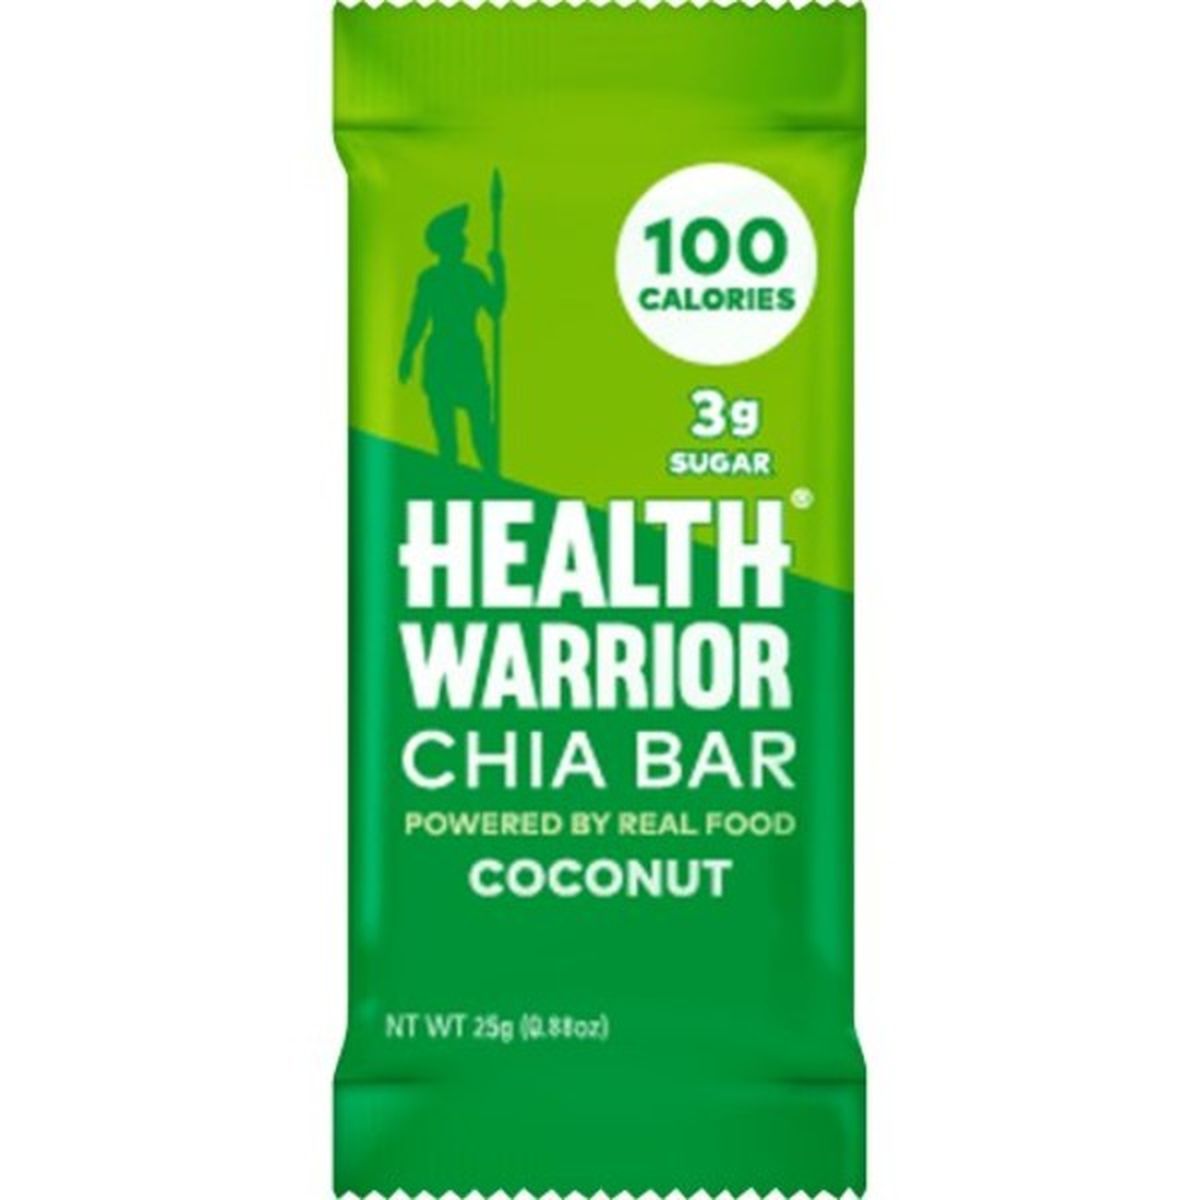 Calories in Health Warrior 100 Calories Chia Bar, Coconut